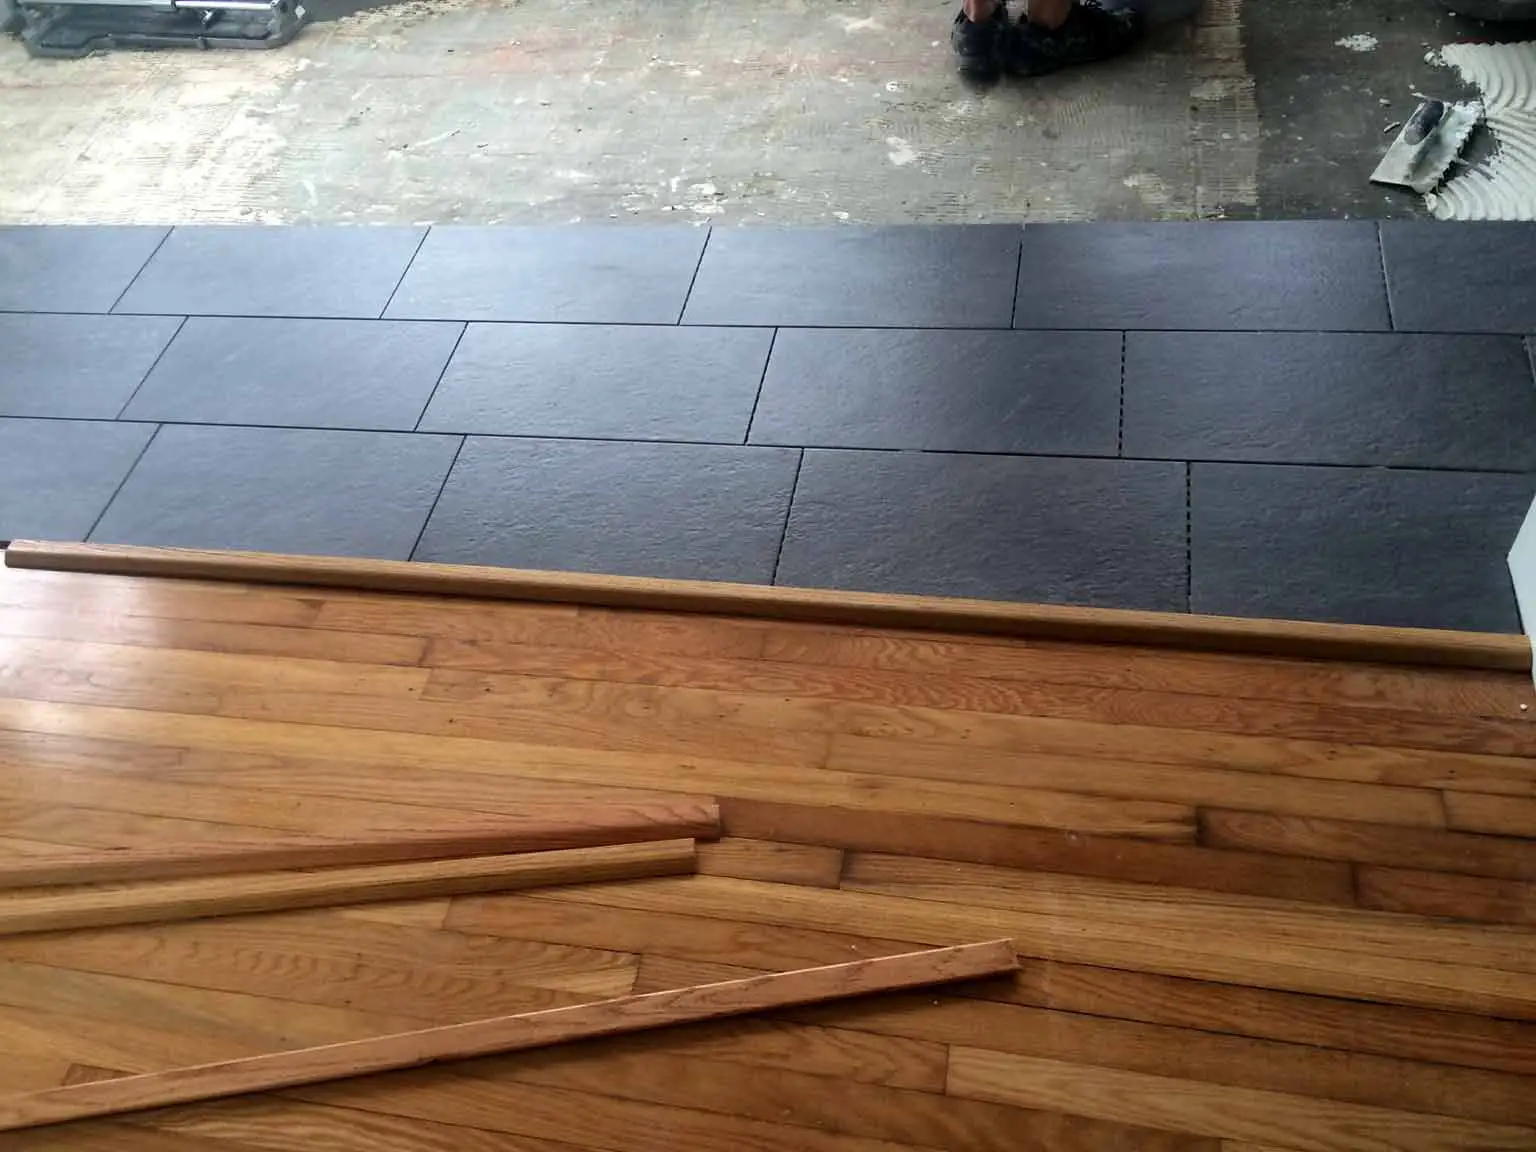 New floor tile being installed - That Homebird Life Blog